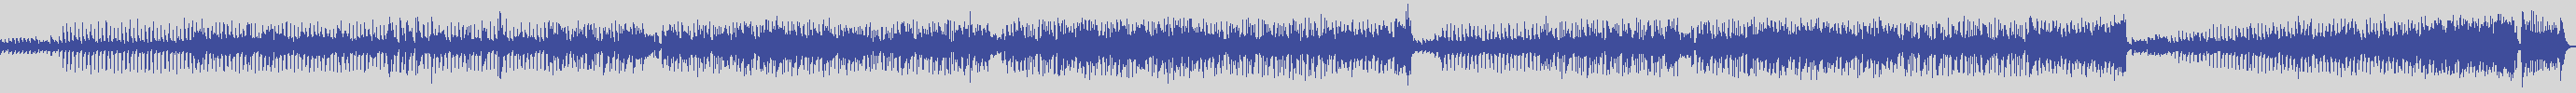 digiphonic_records [DPR013] Little Tony - Polk Salad Annie [Original Mix] audio wave form